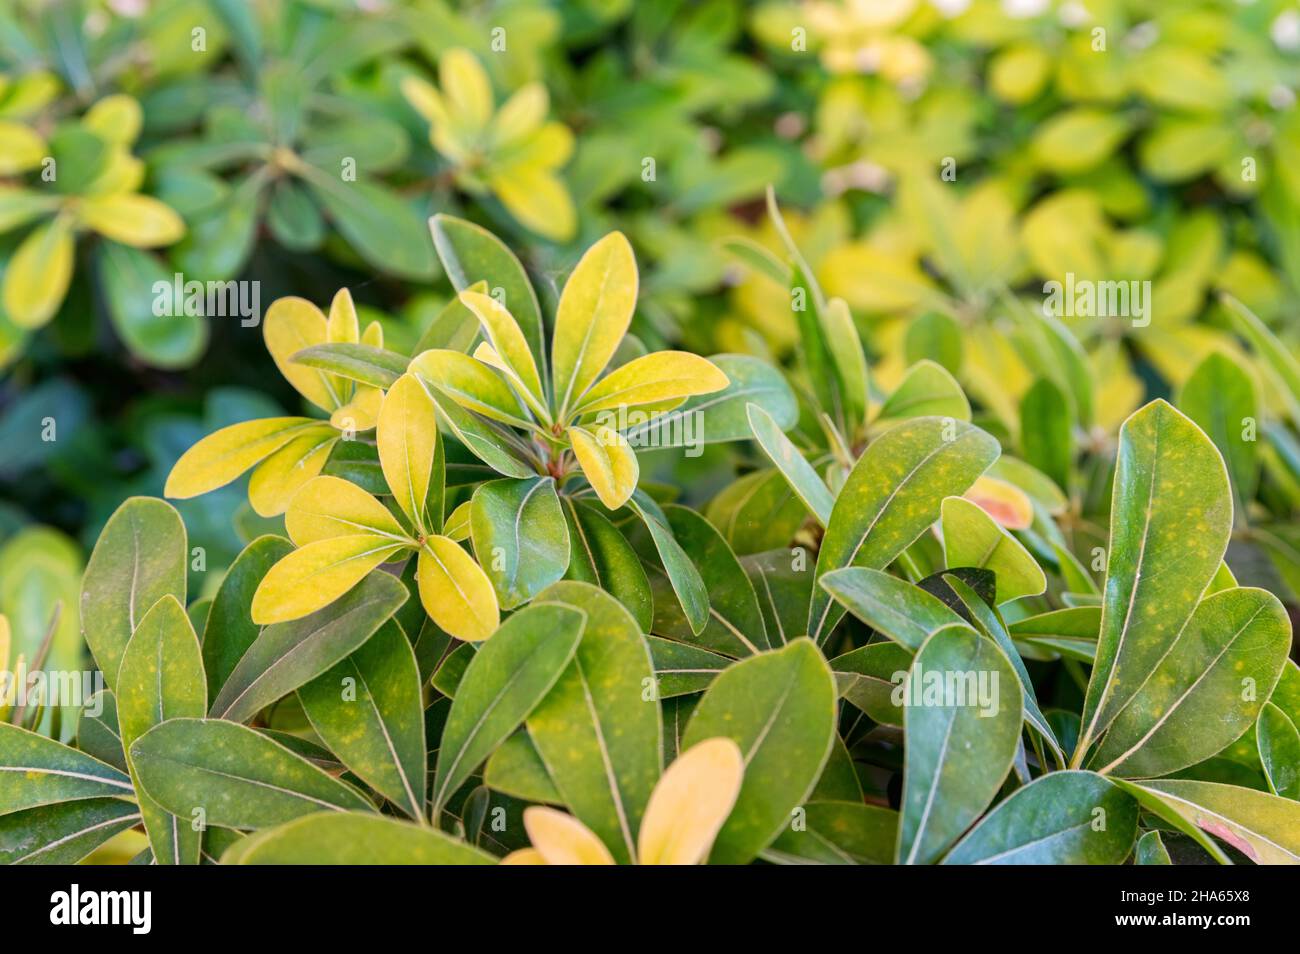 Close-up schefflera green foliage plant background. Selective focus Stock Photo